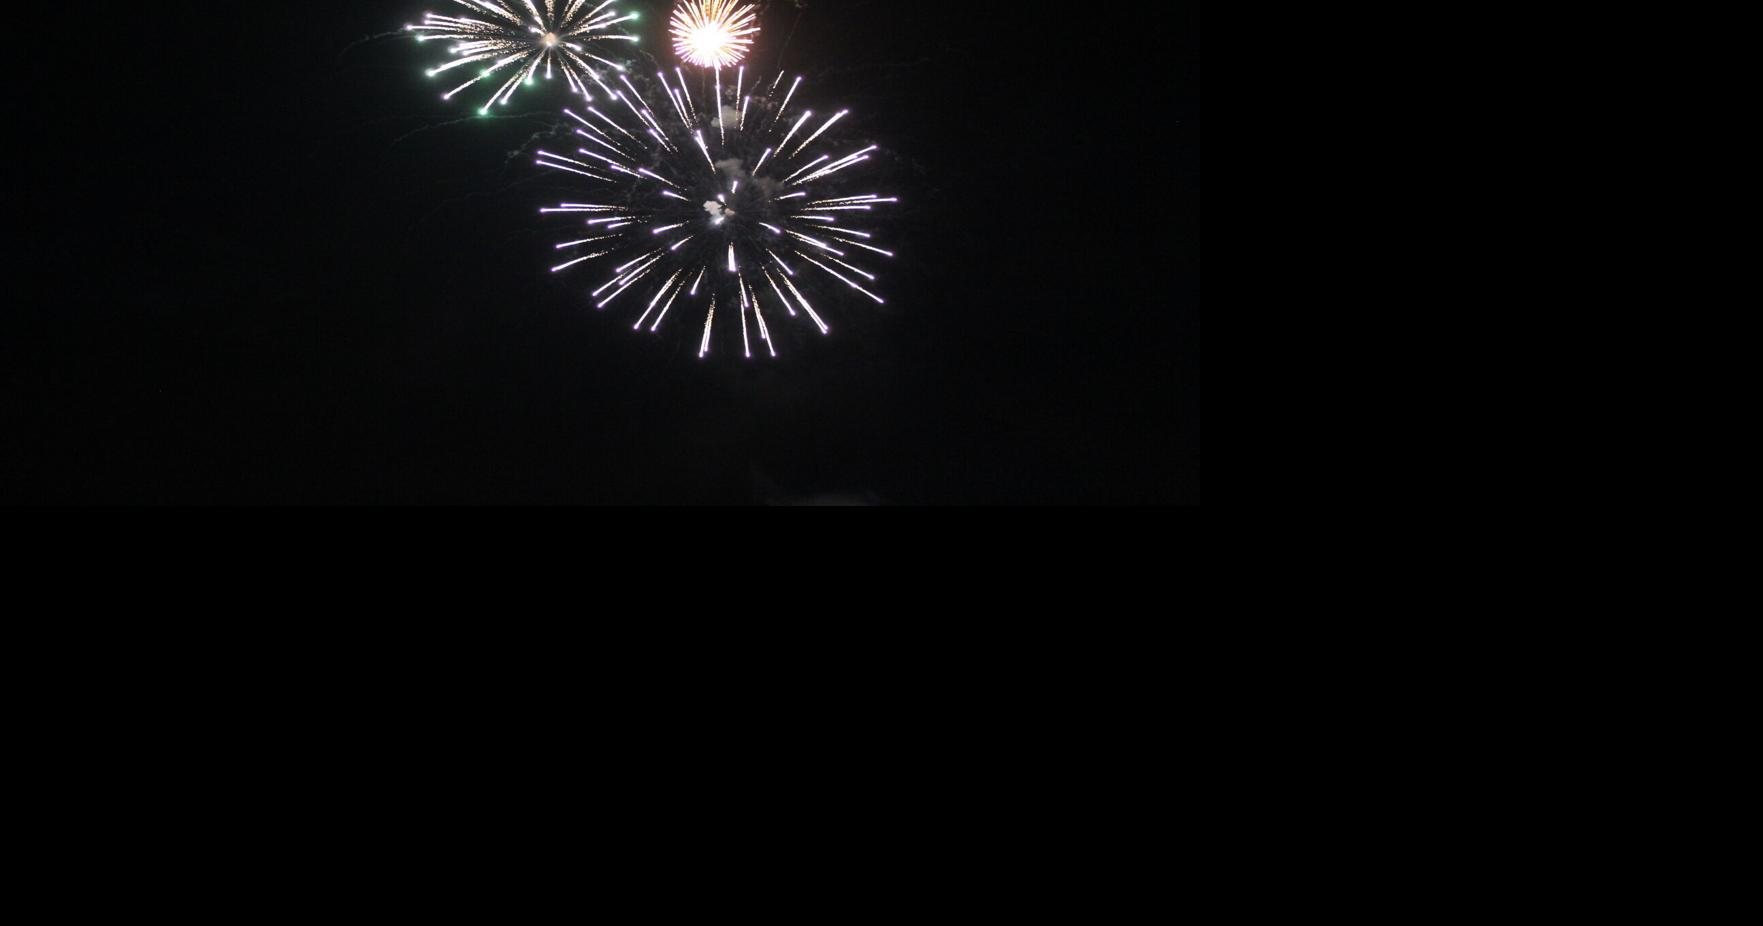 Chesapeake City celebrates Independence Day with fireworks Photo